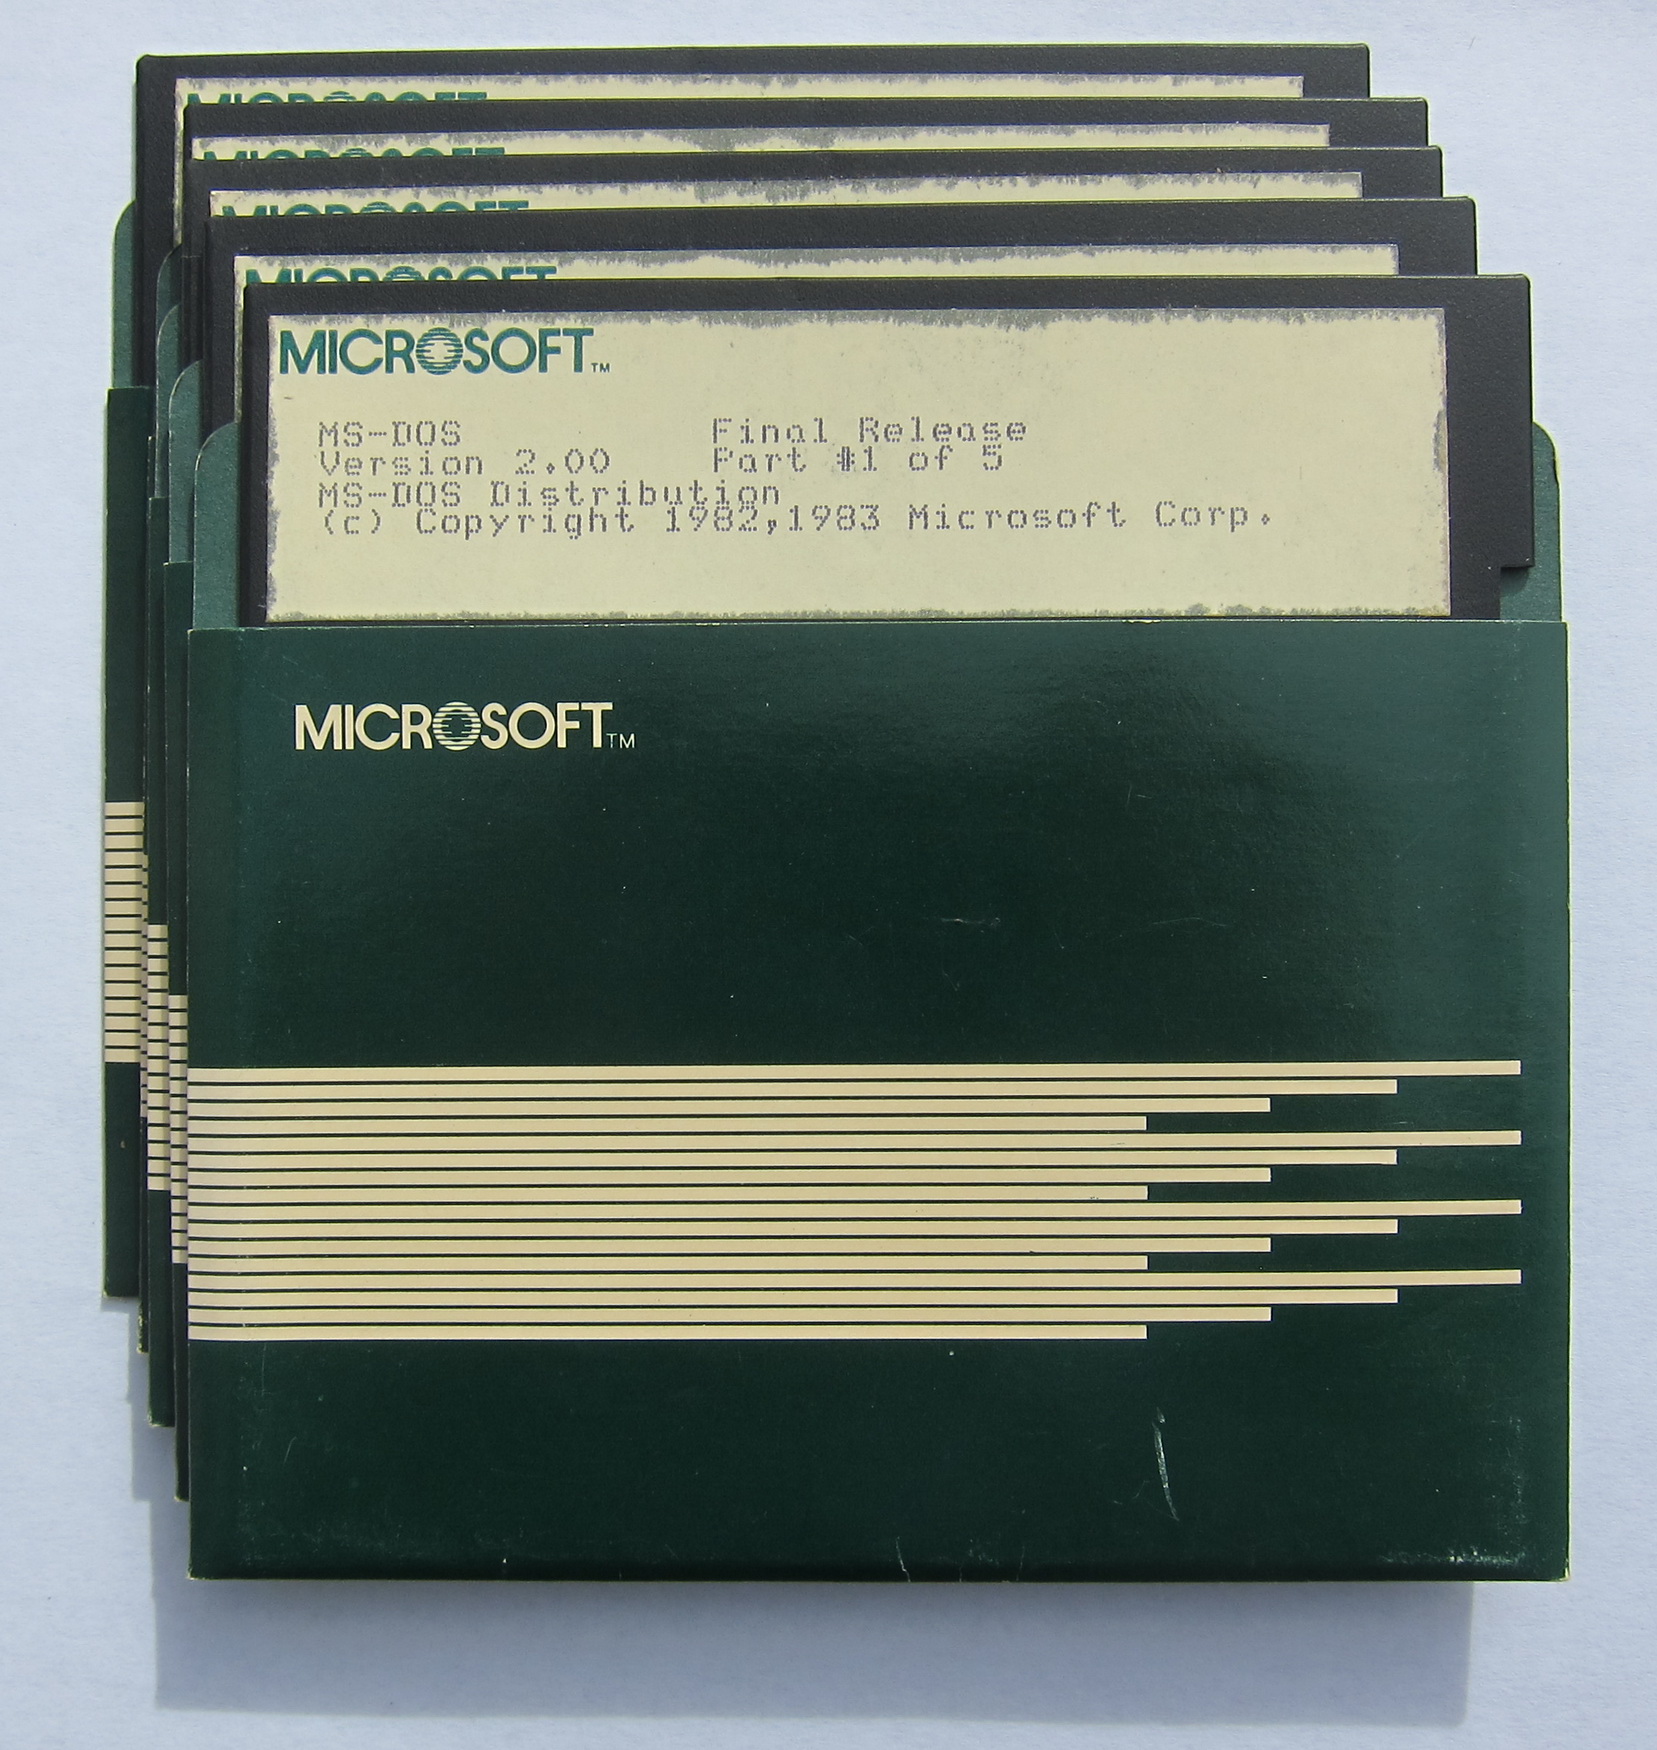 MS-DOS 2.00